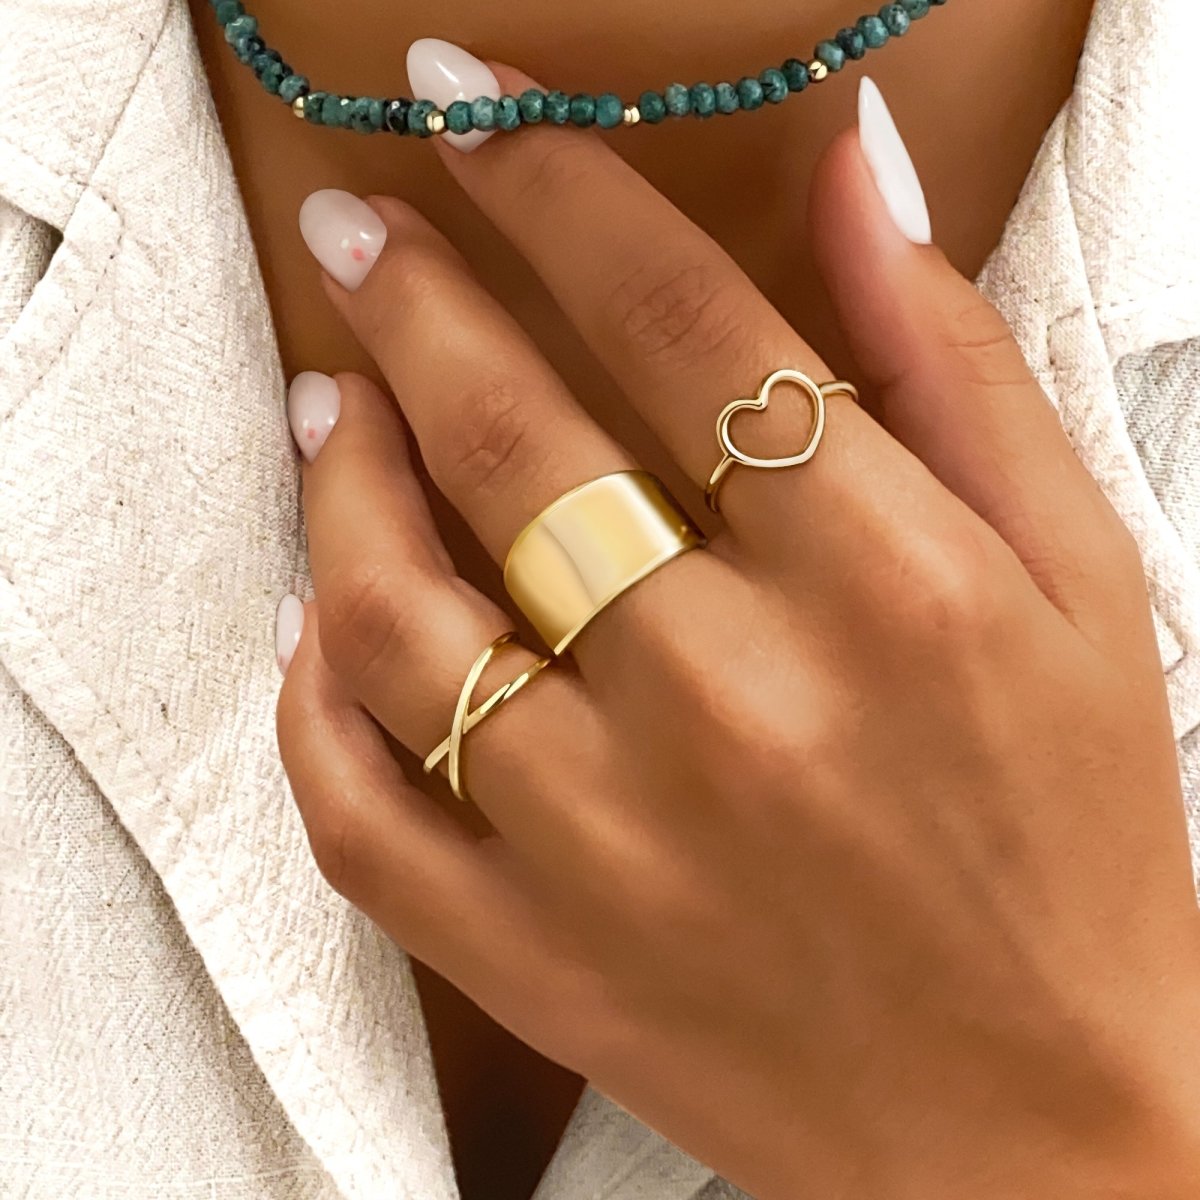 Women's Pear Shaped Engagement Rings | Kohl's